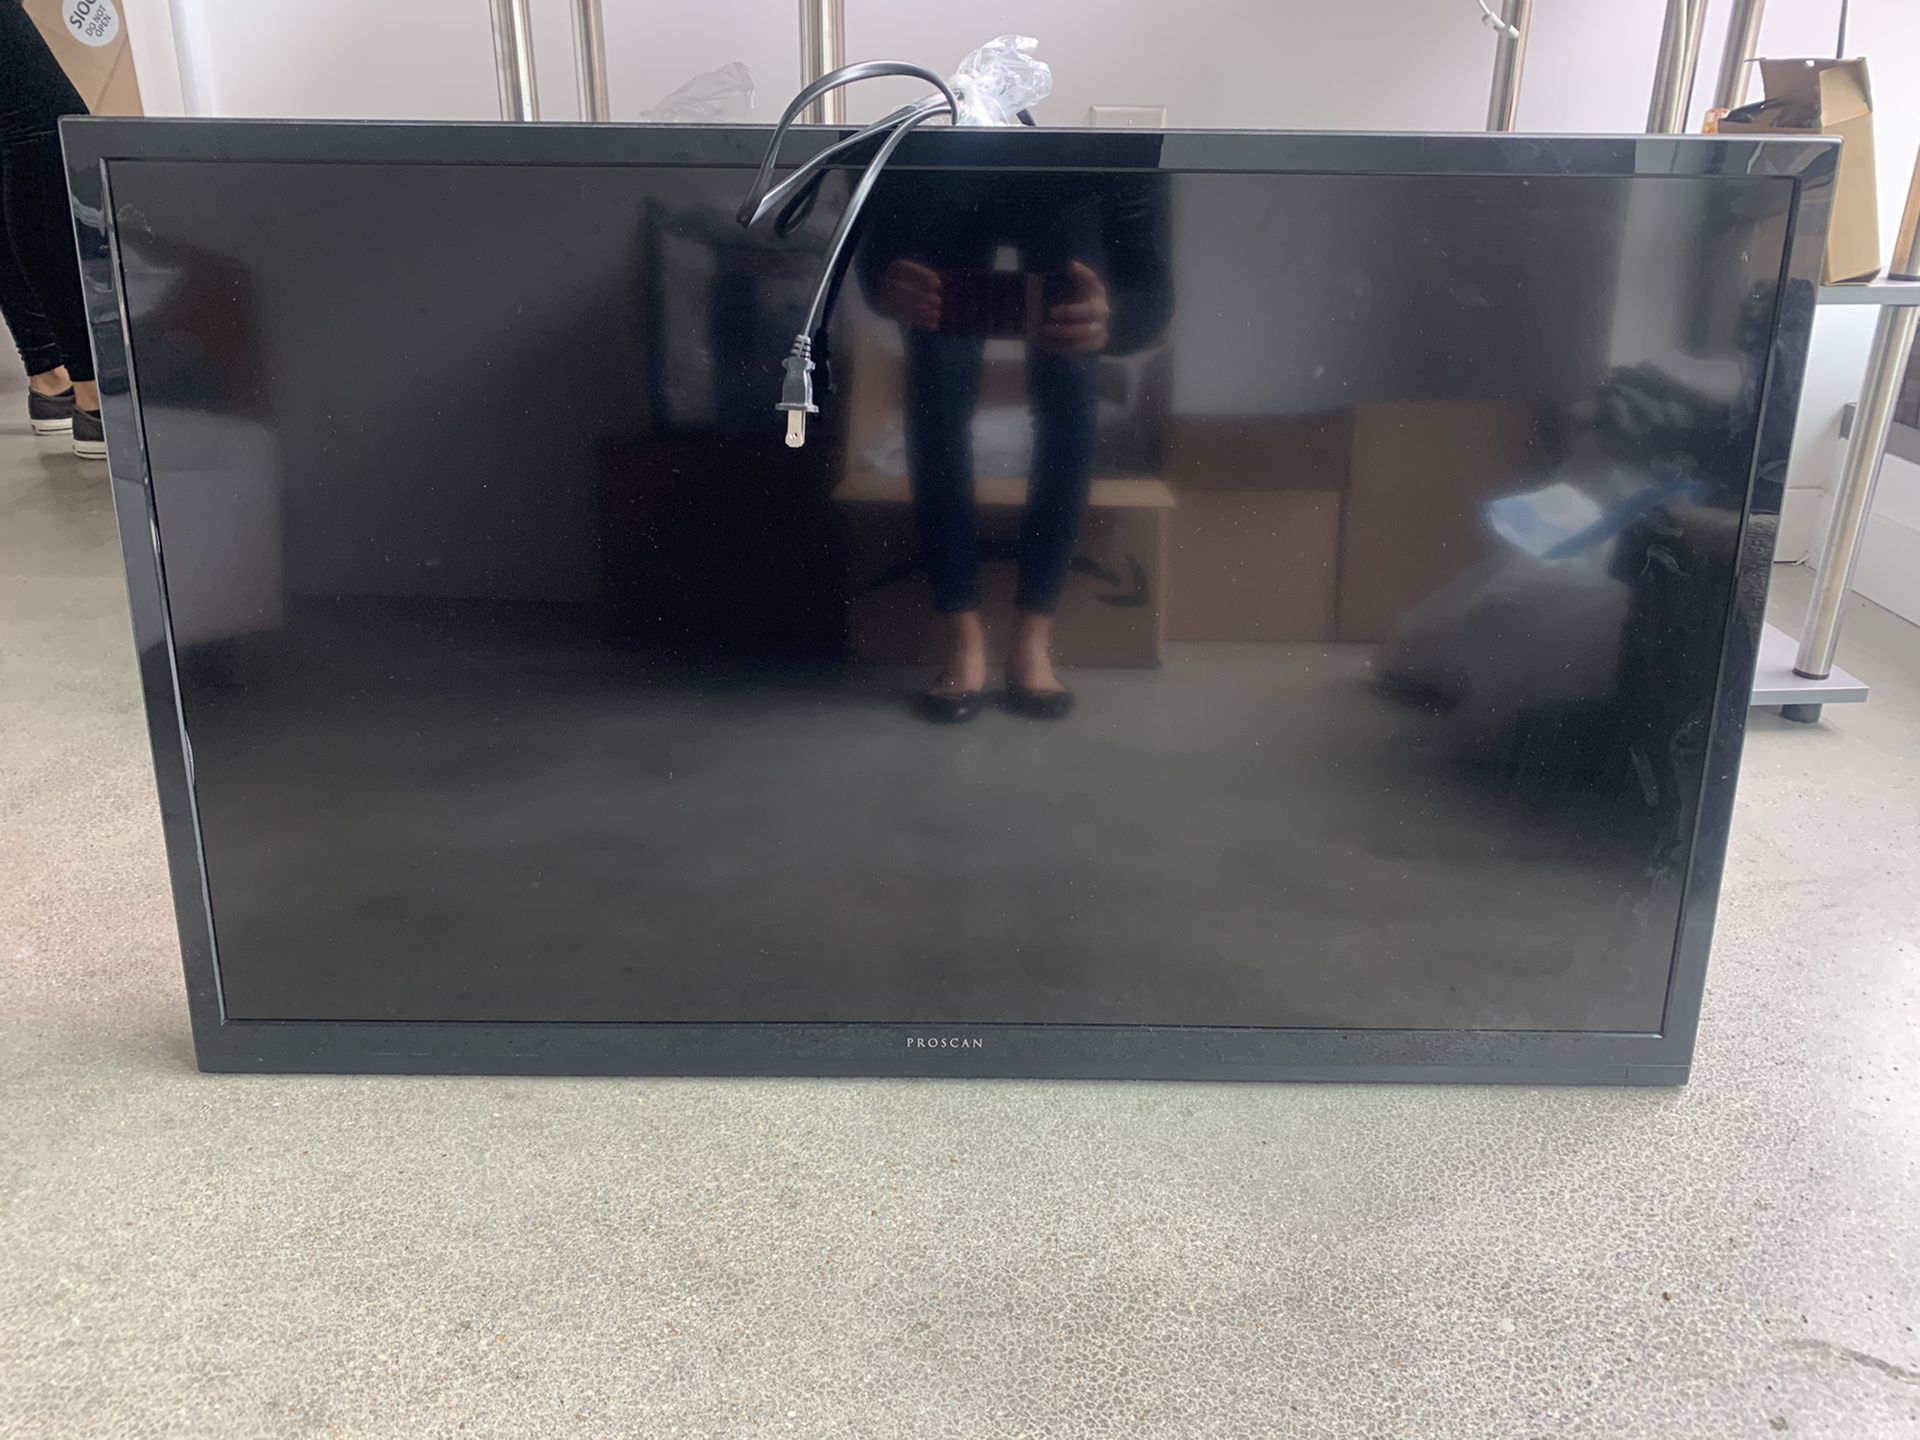 Proscan Flat screen TV